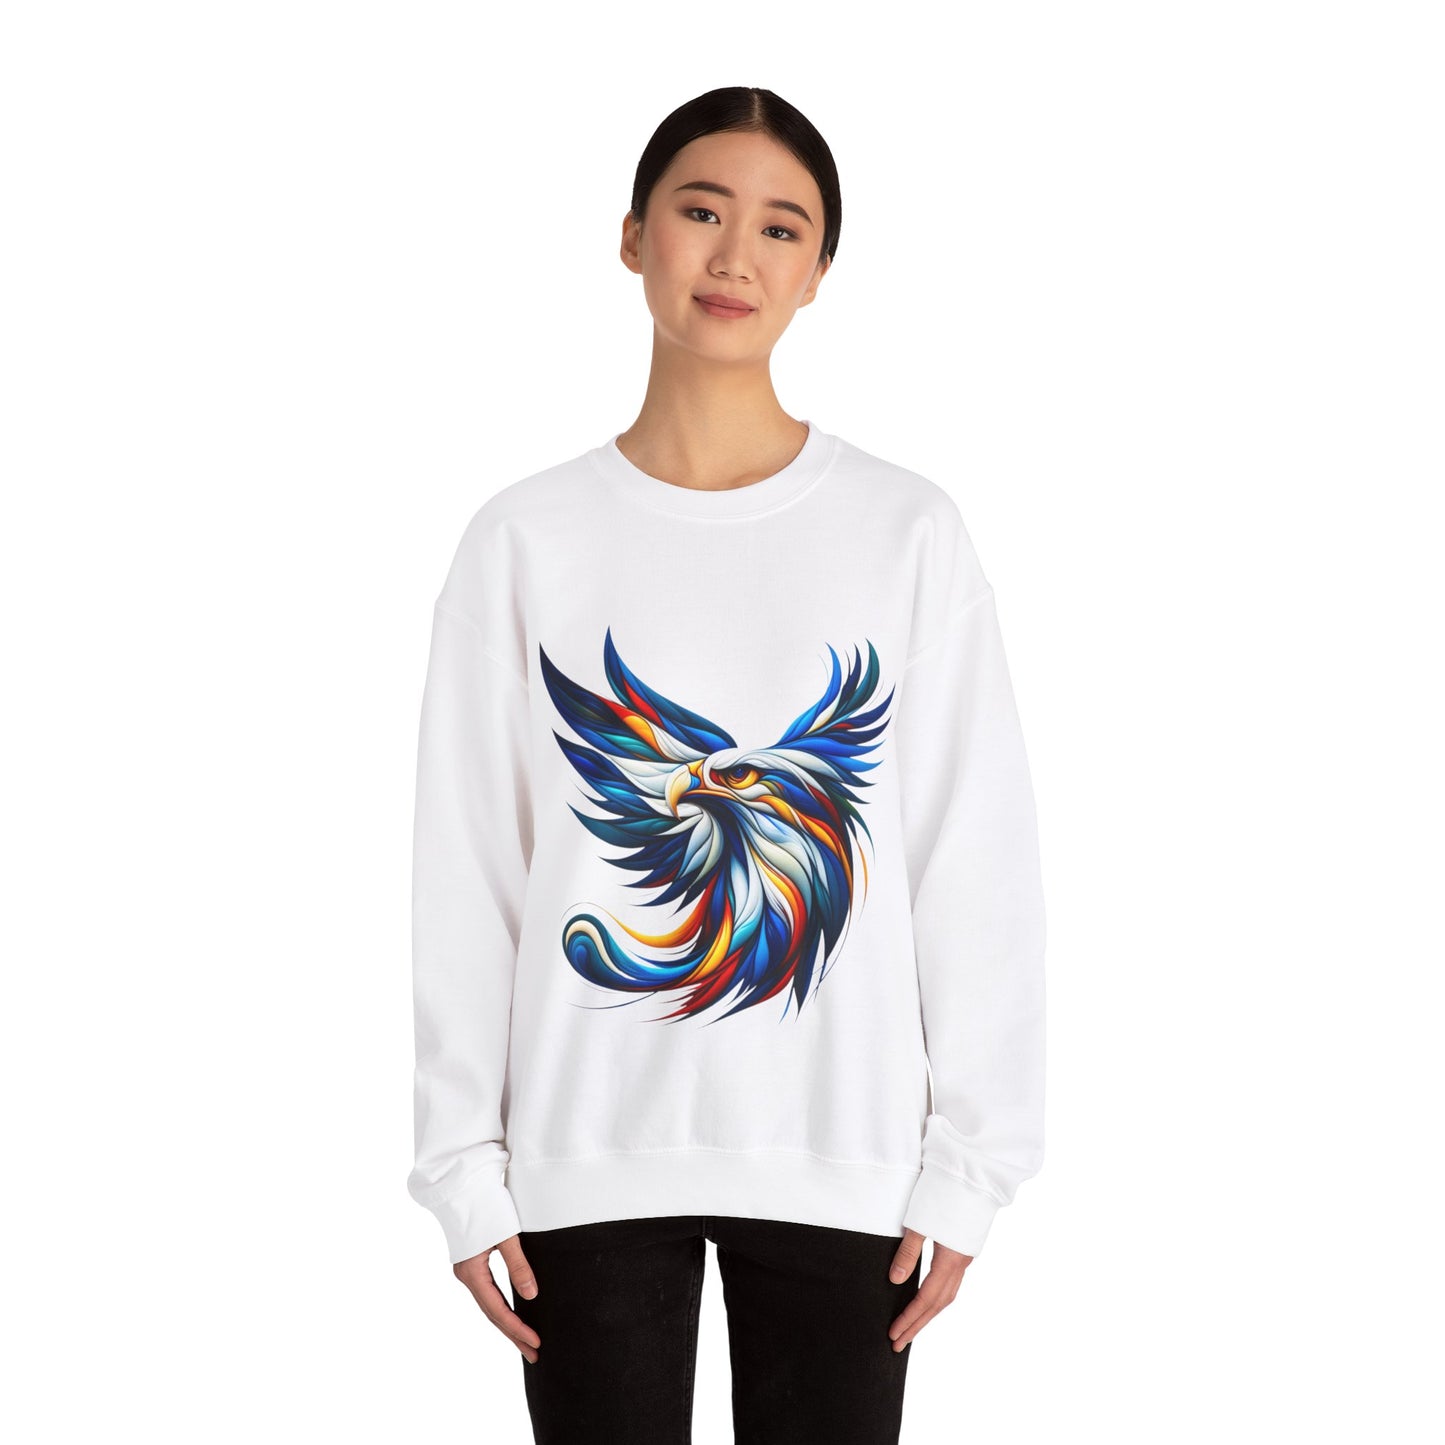 Fly High with Fashion: The Colorful Eagle Head Sweatshirt Awaits